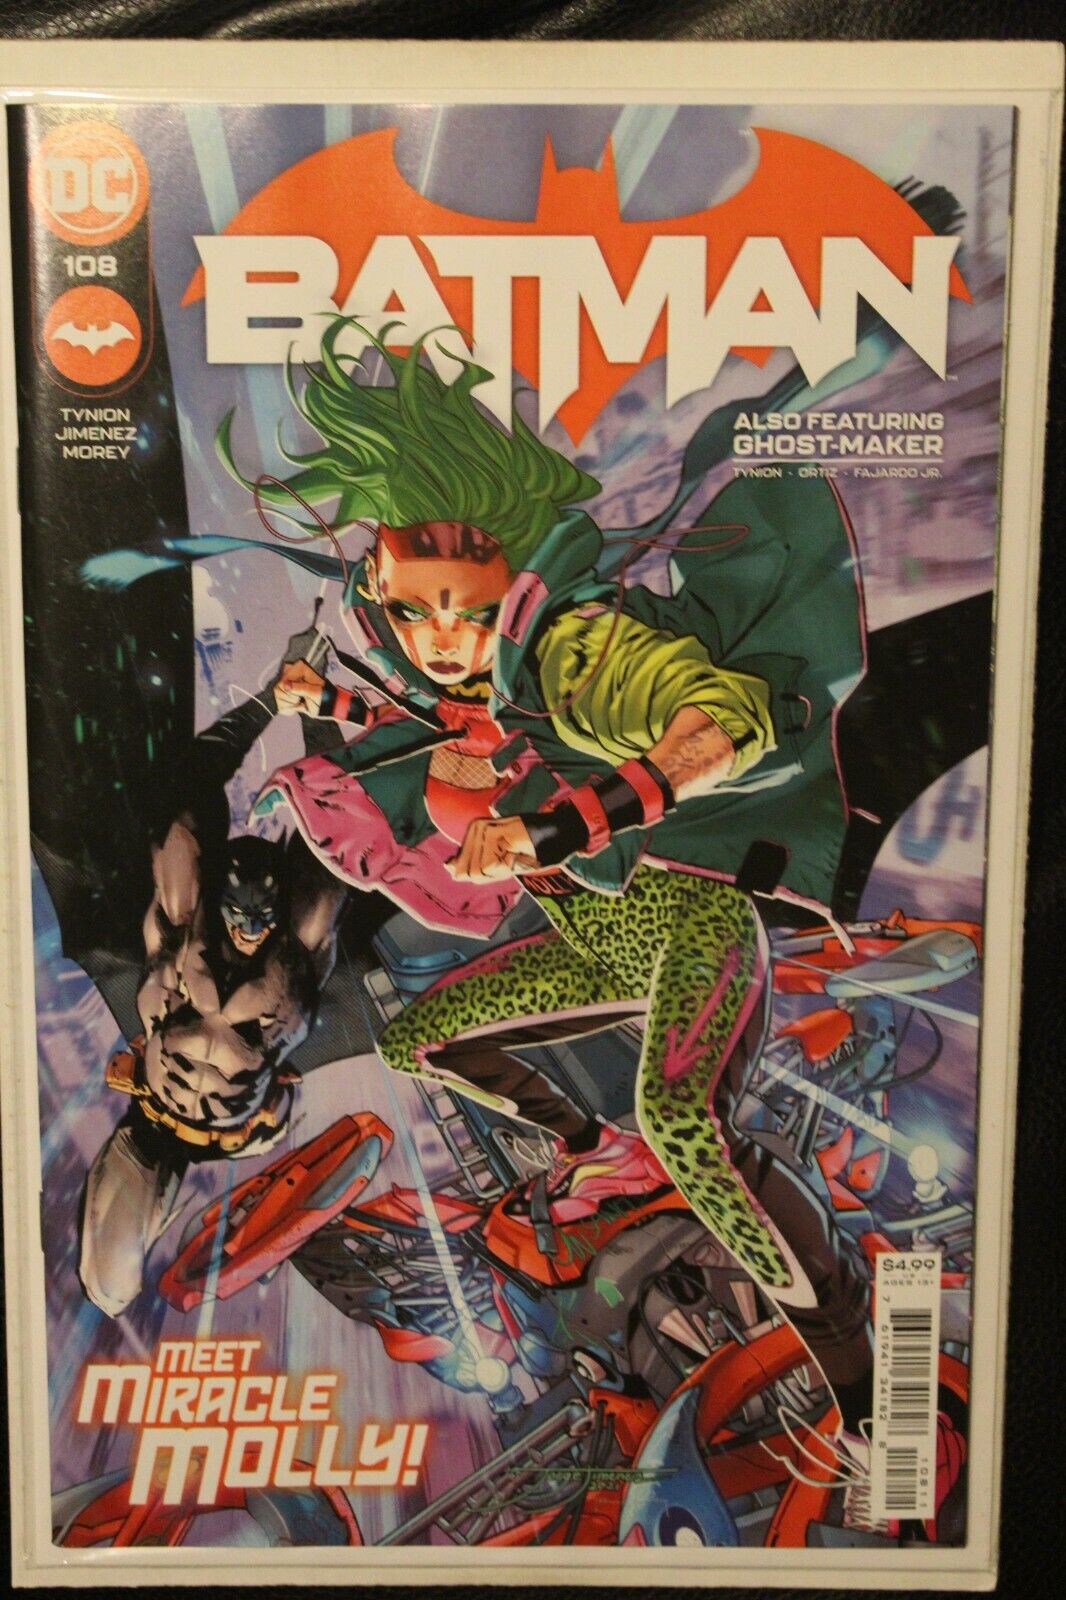 BATMAN #108 Jorge Jimenez Cover 2021 DC Comics 1st Appearance Miracle Molly